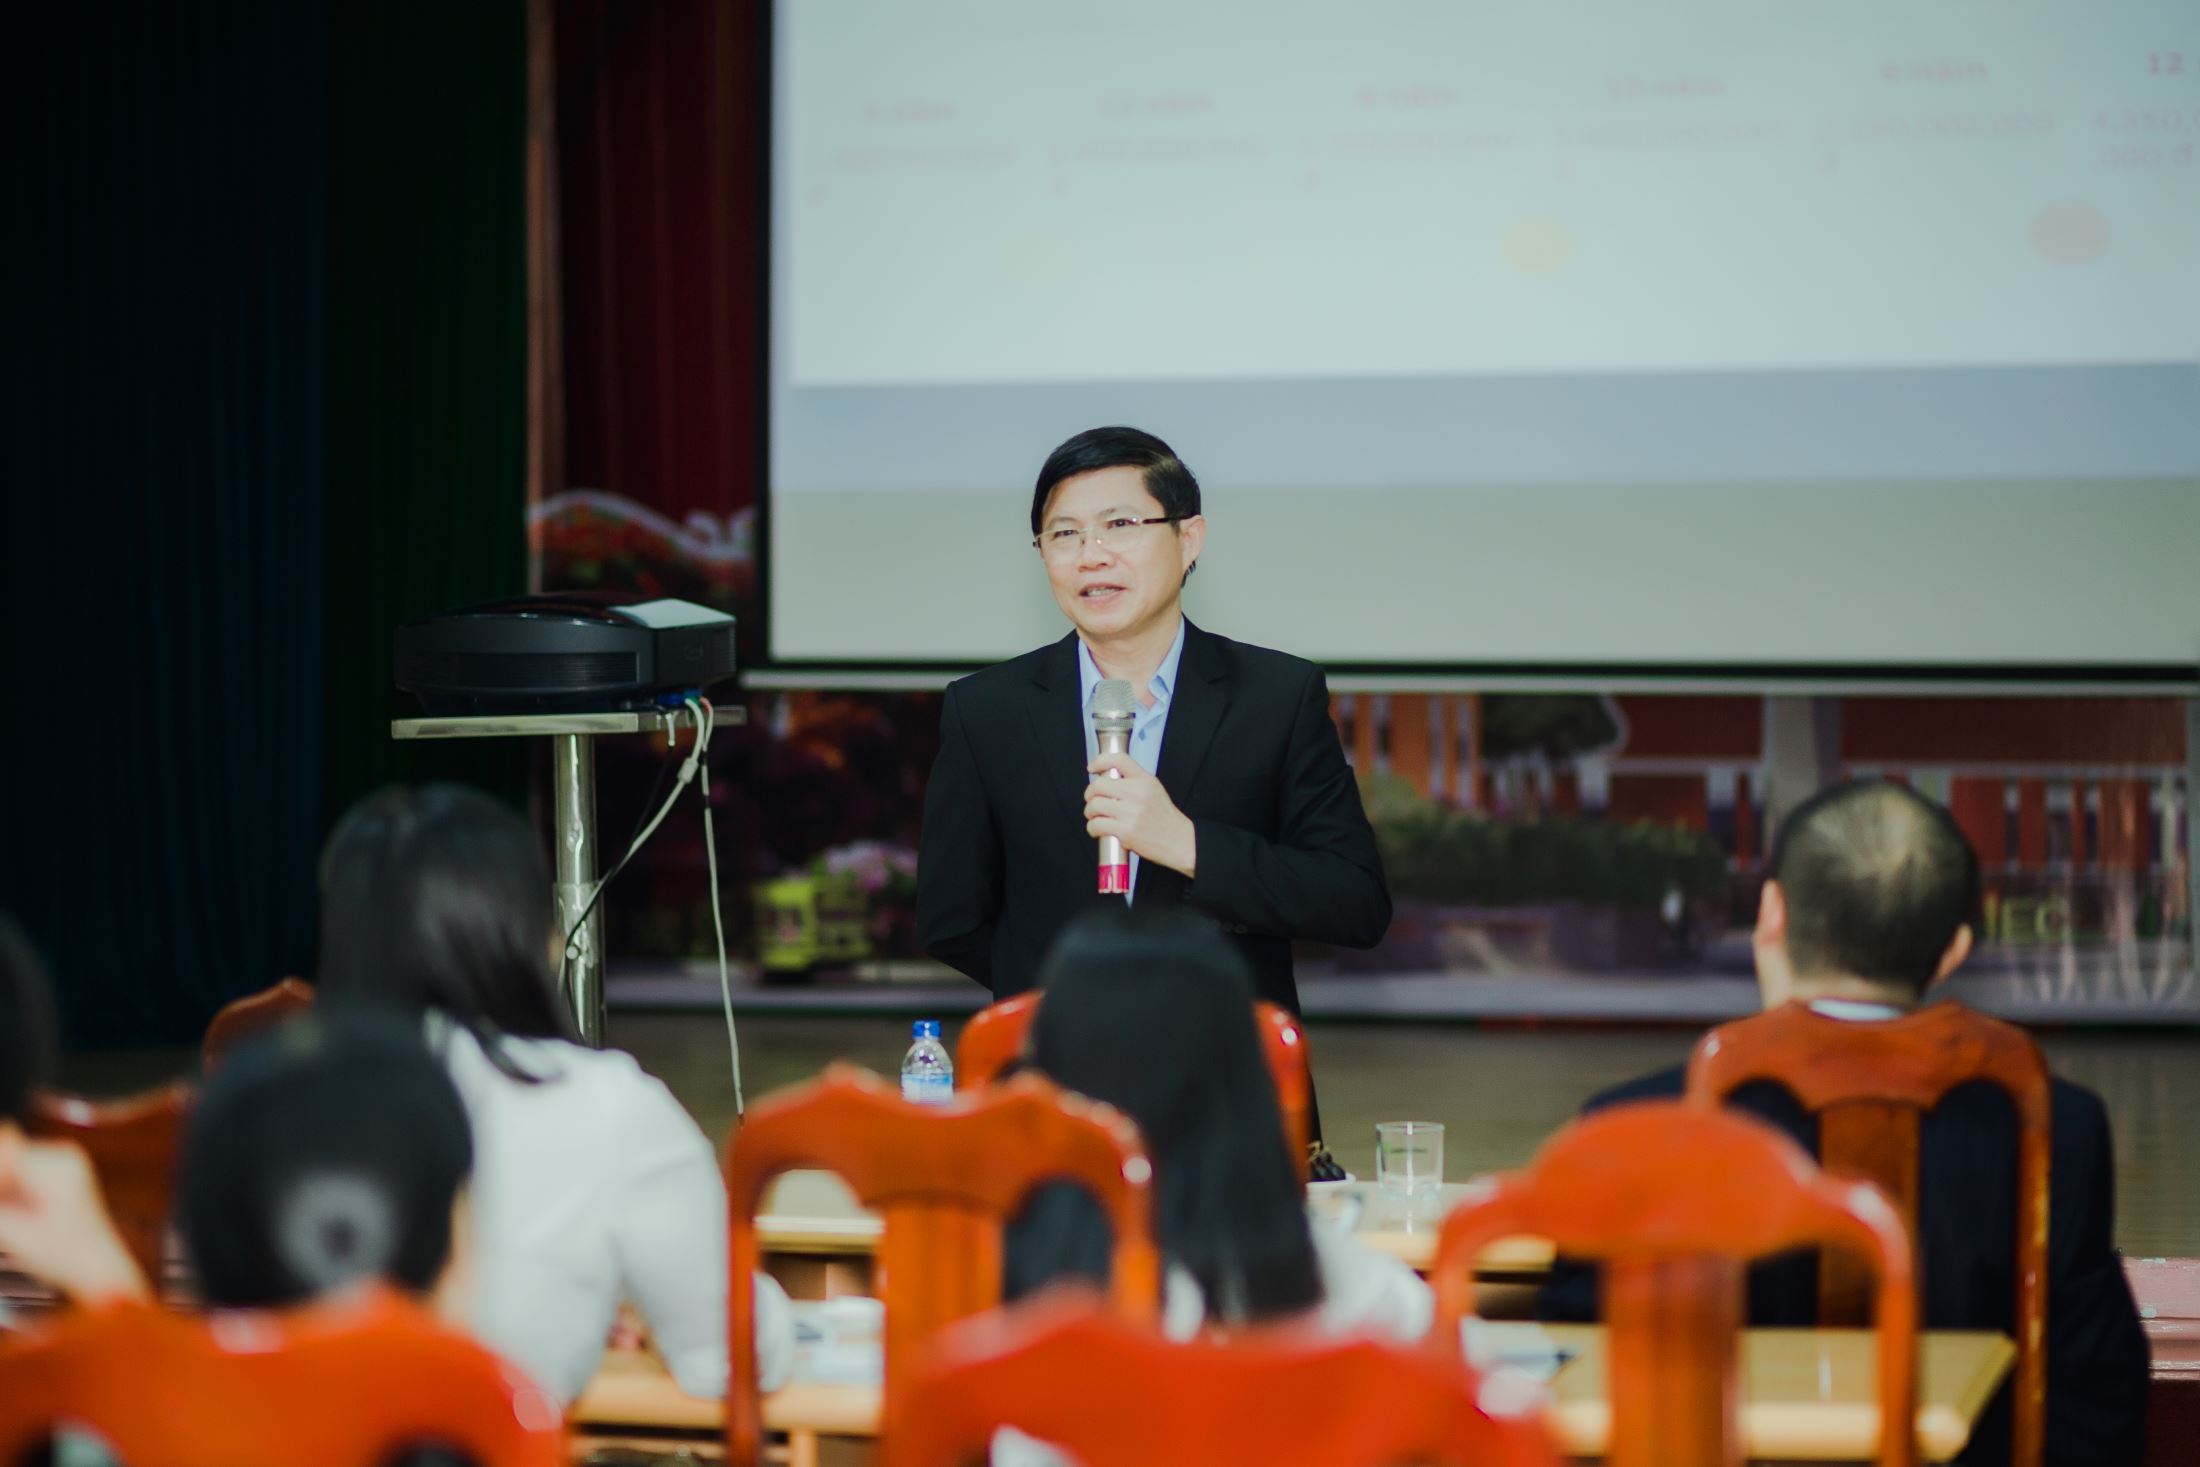 Dr. Pham Van Hung – General Principle of IEC Quang Ngai answering the questions of parents